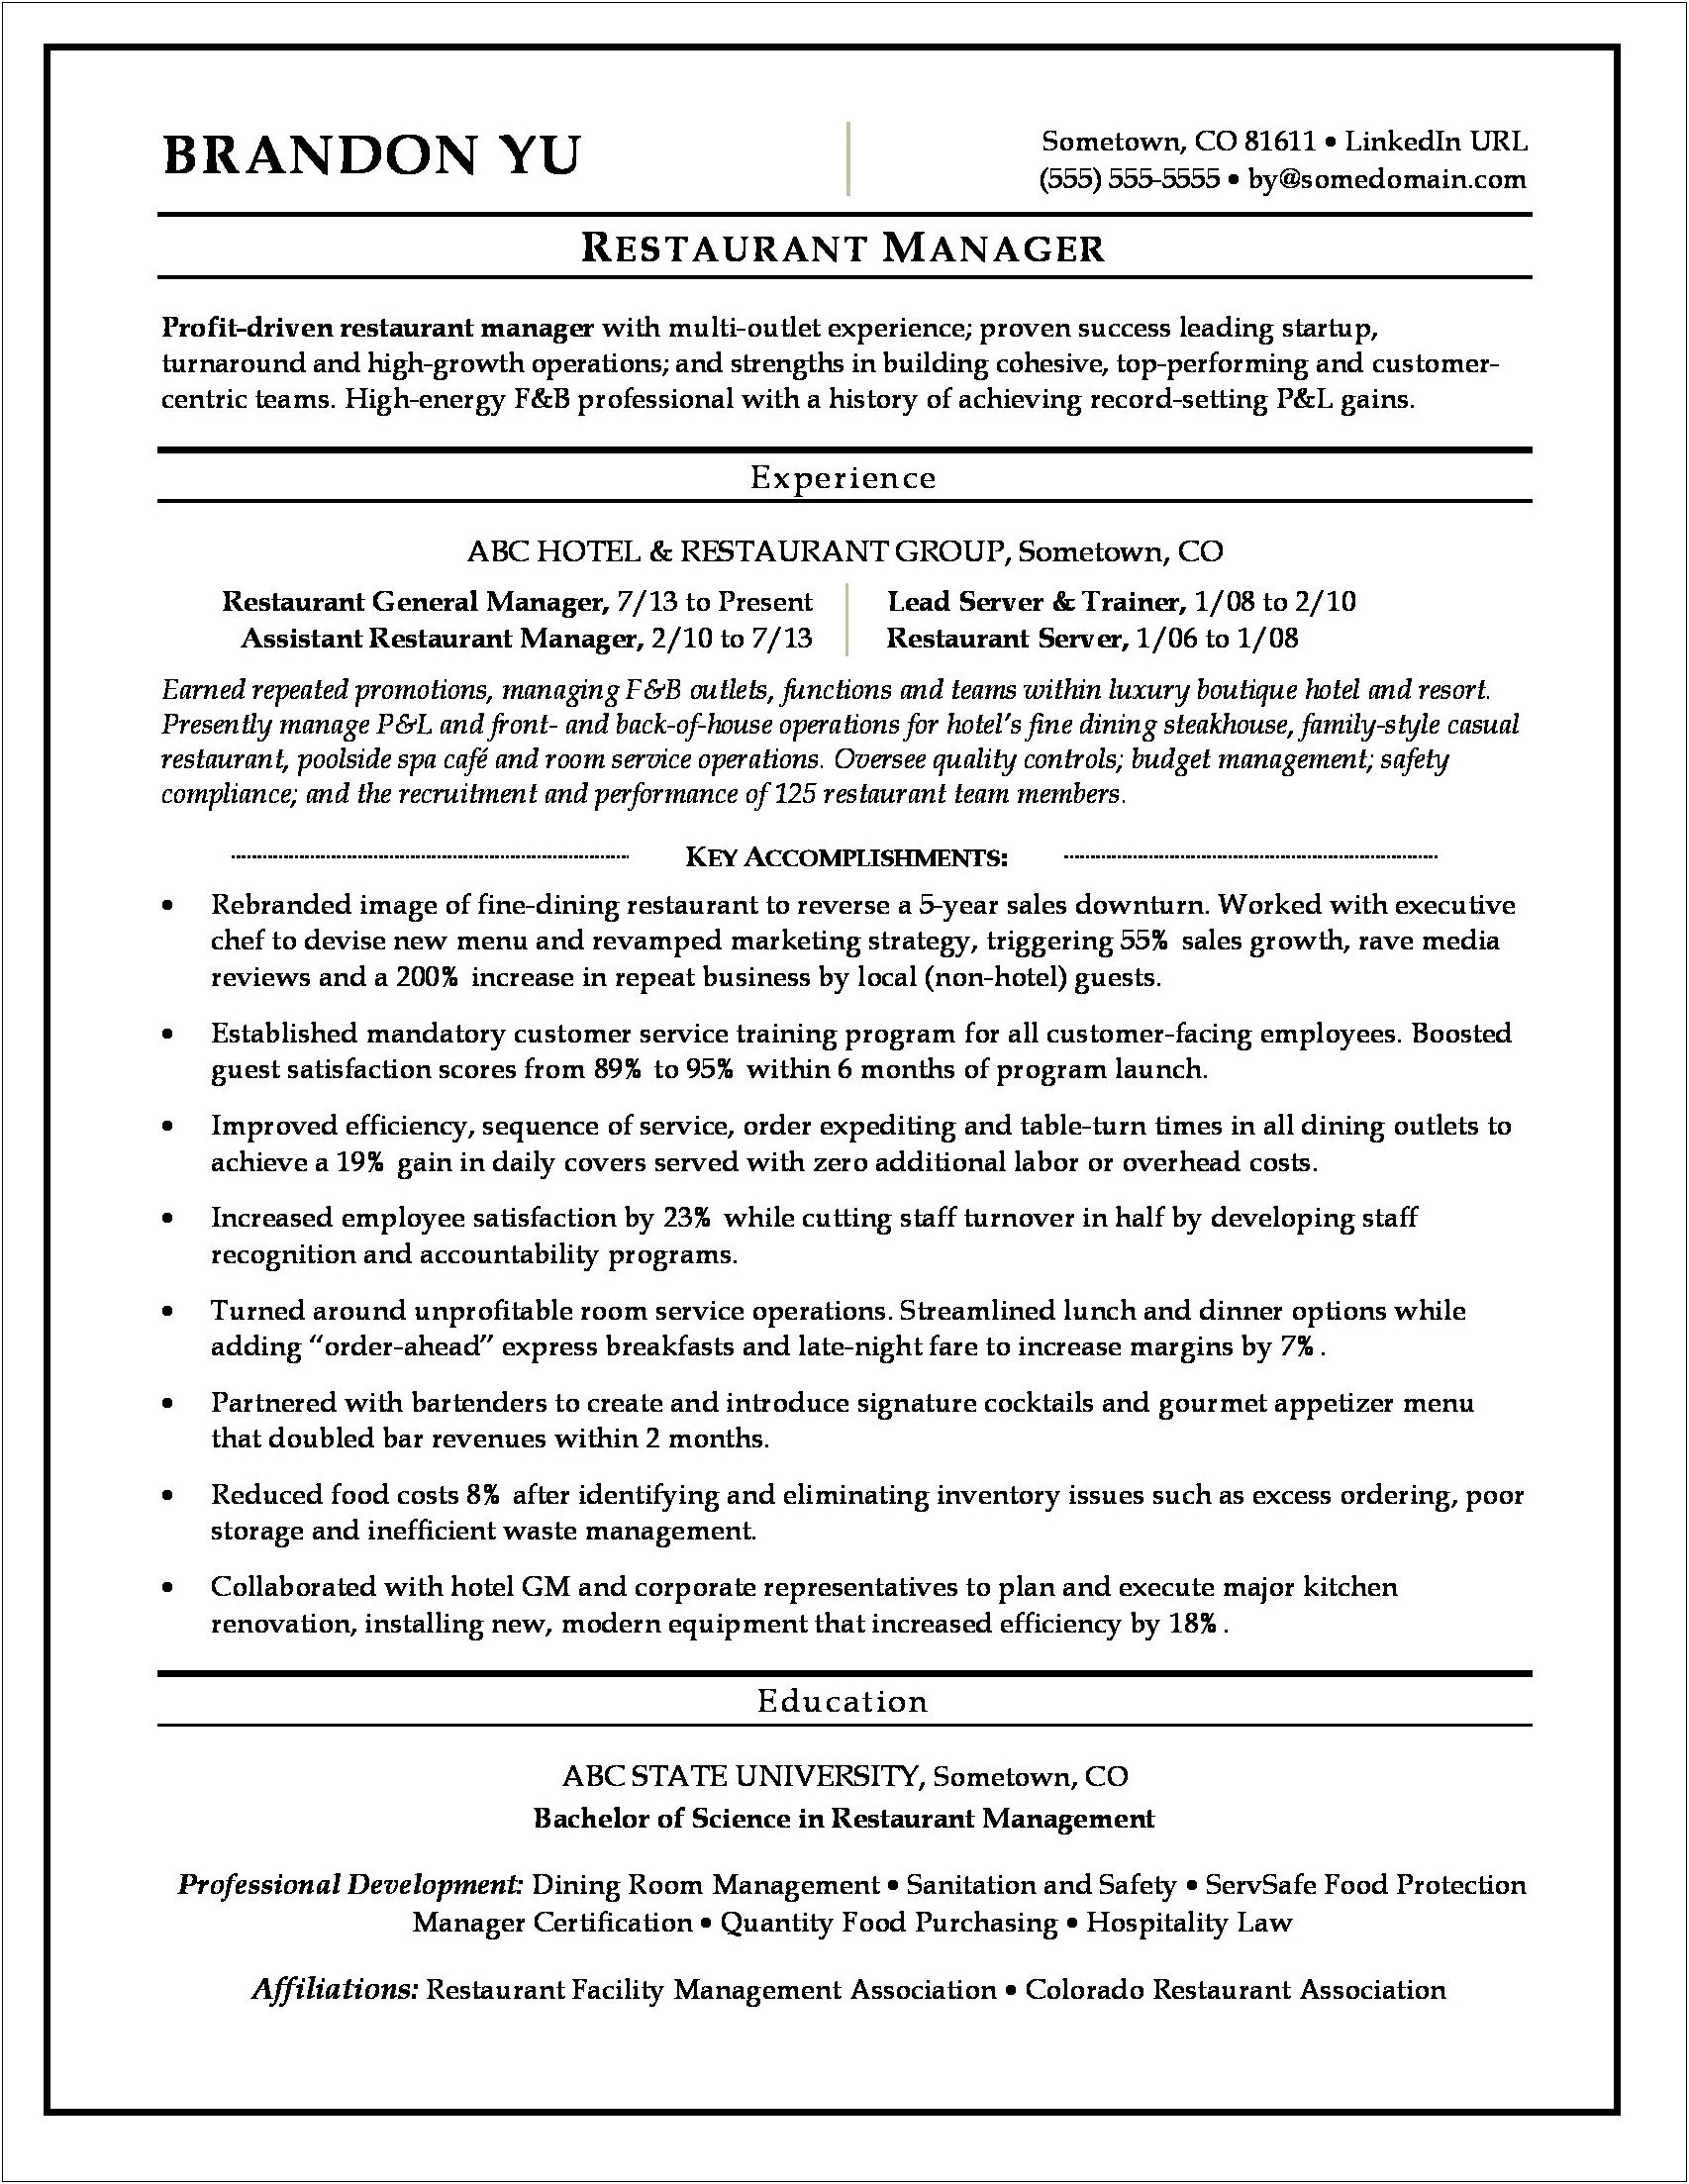 Resume Restaurant Manager Job Description